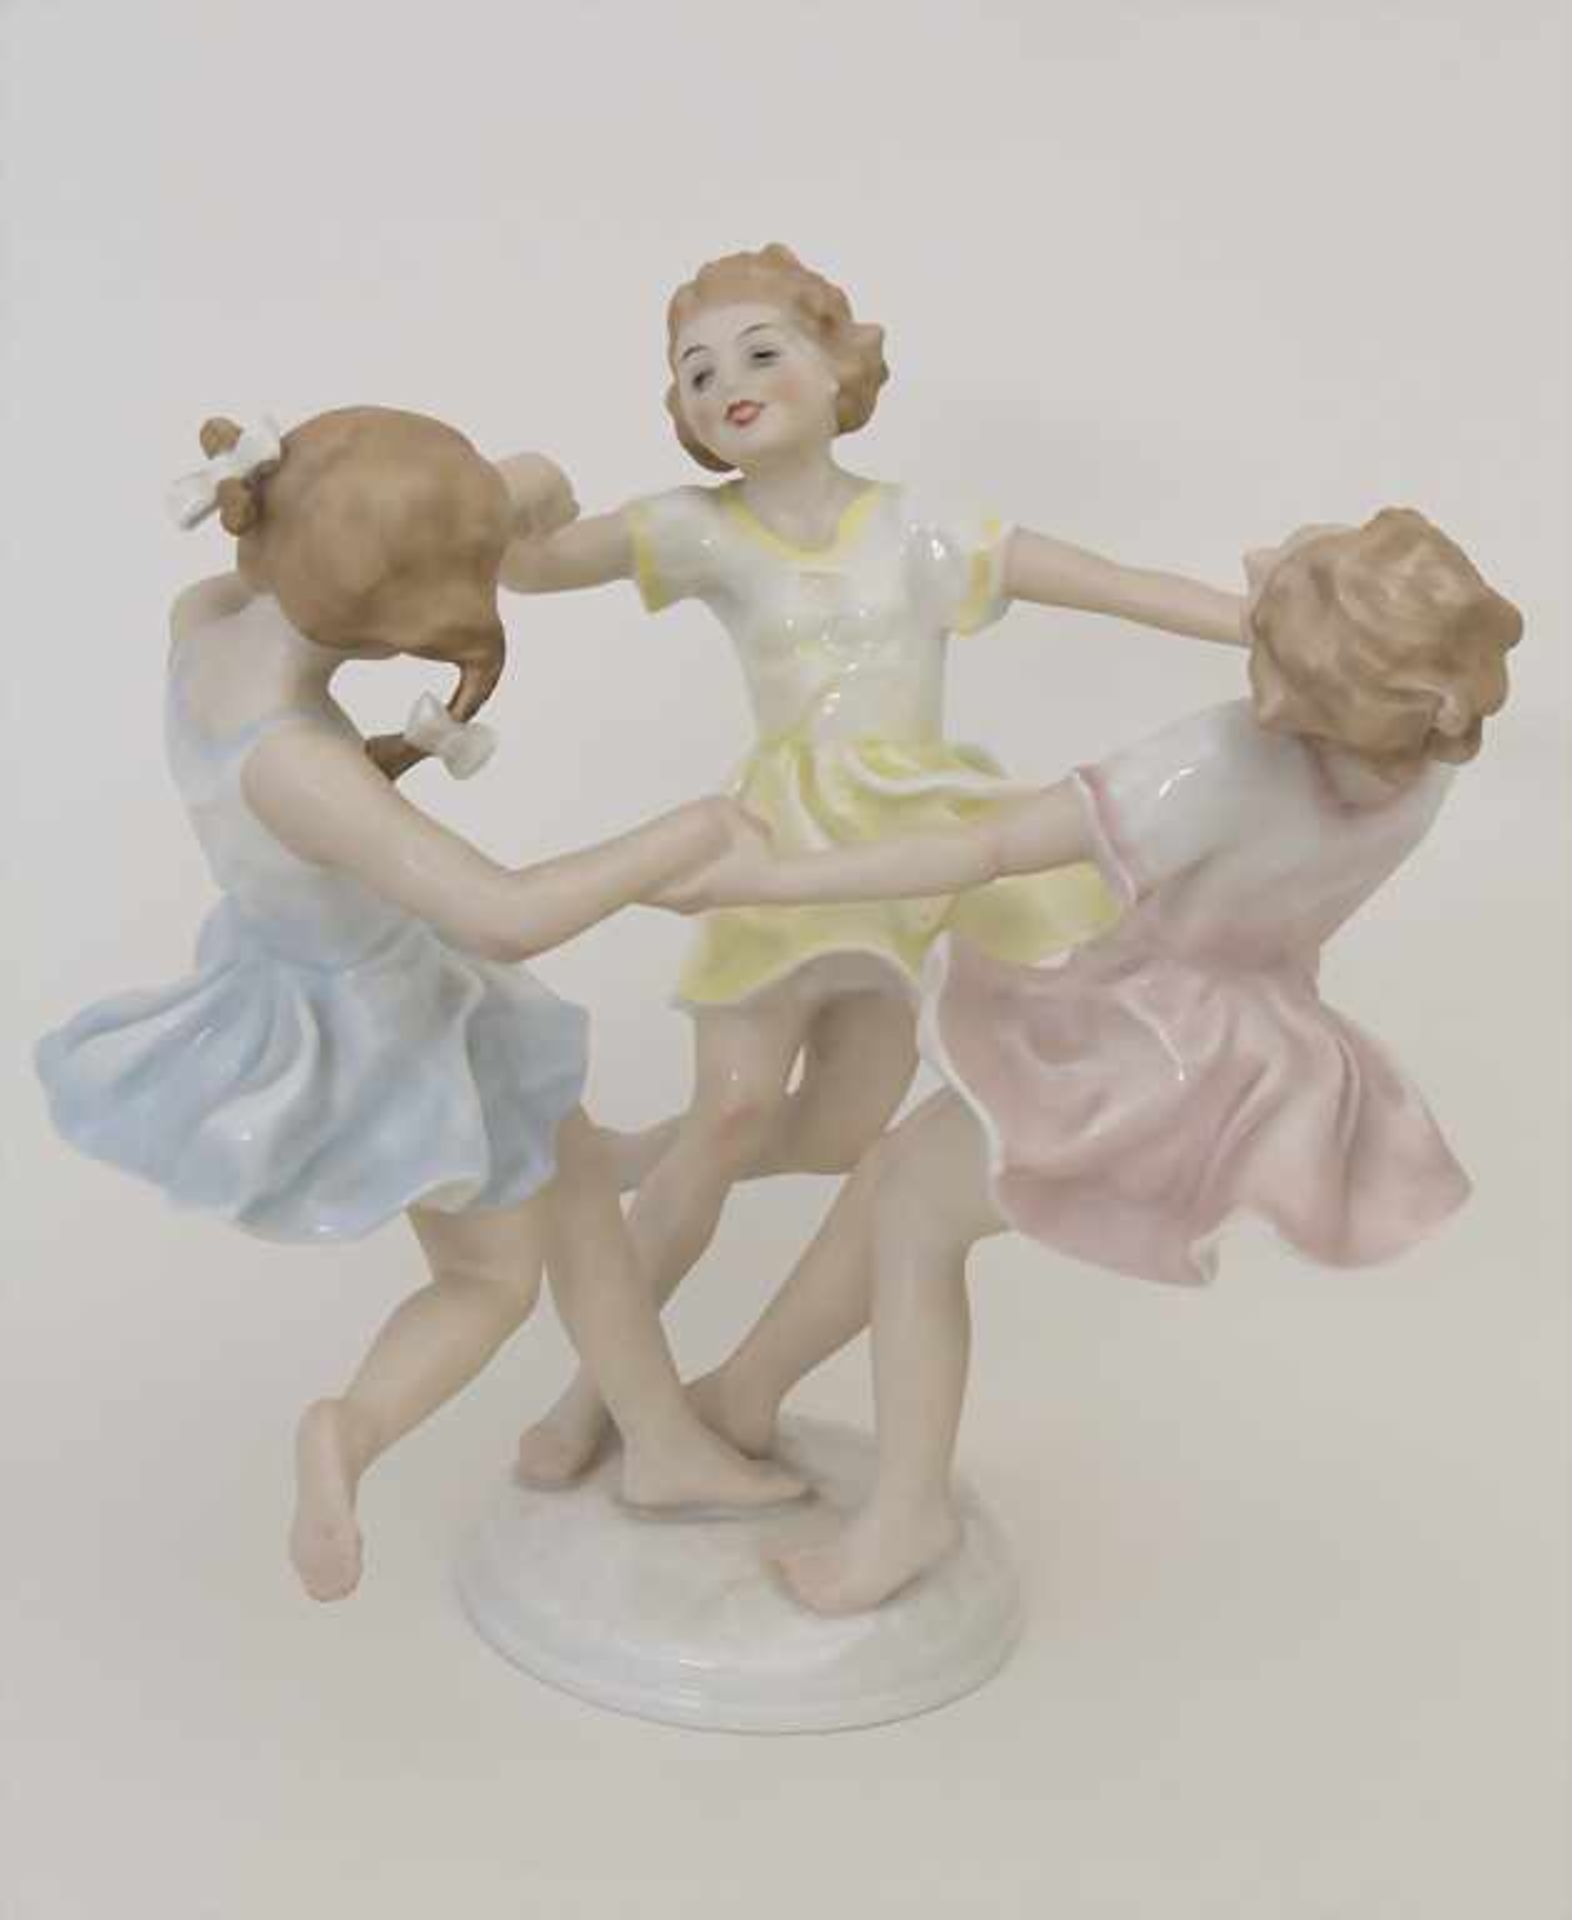 Figurengruppe 'Maientanz' / A figure group 'May dance', K. Tutter für Hutschenreuther, 1955- - Image 2 of 5